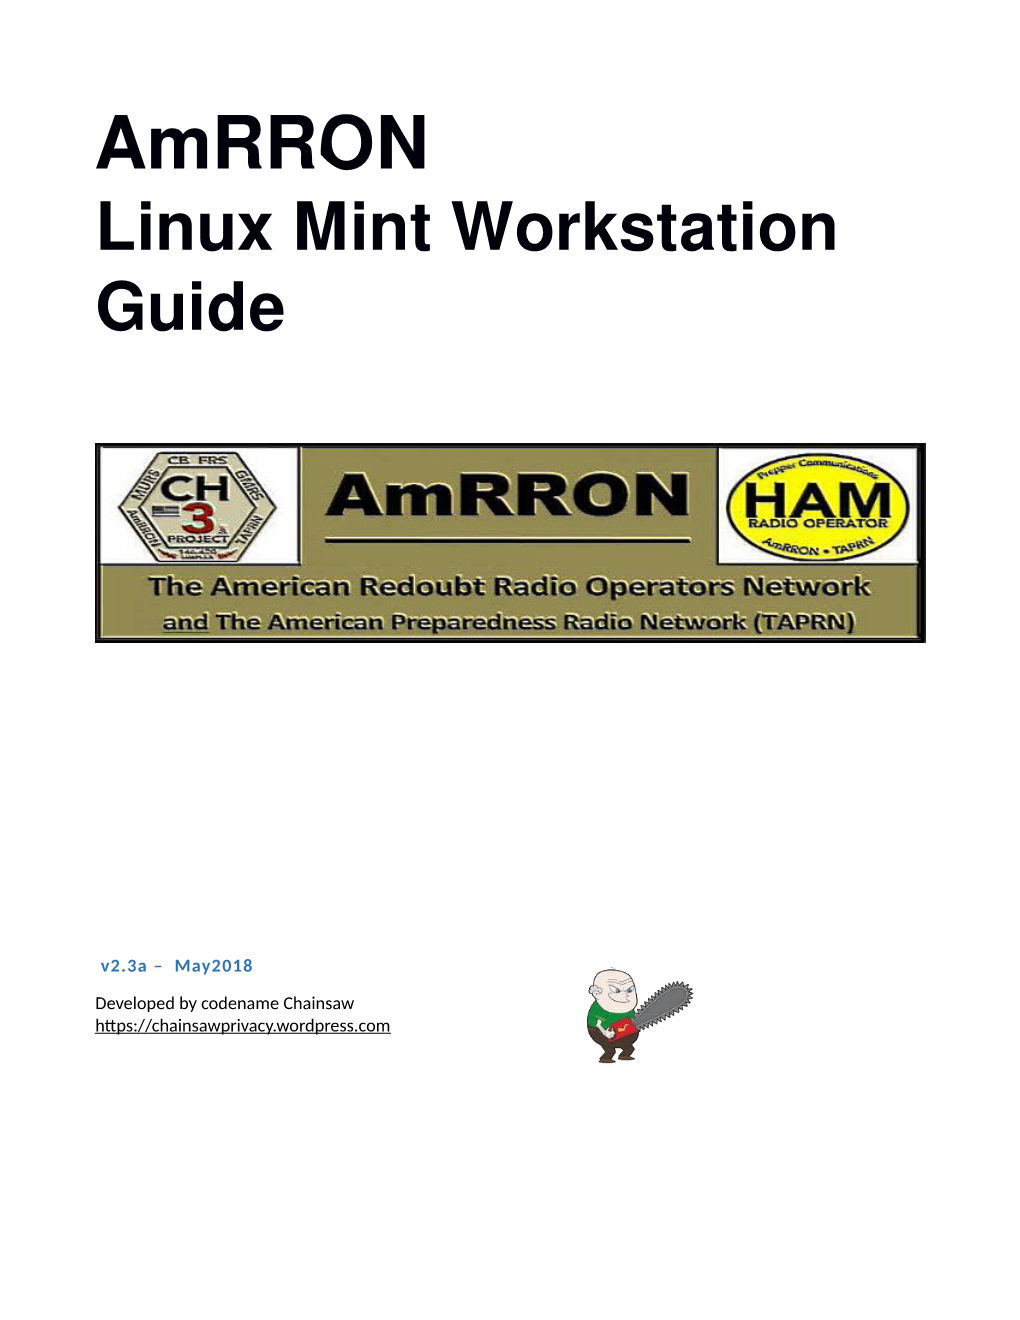 Linux Workstation Guide